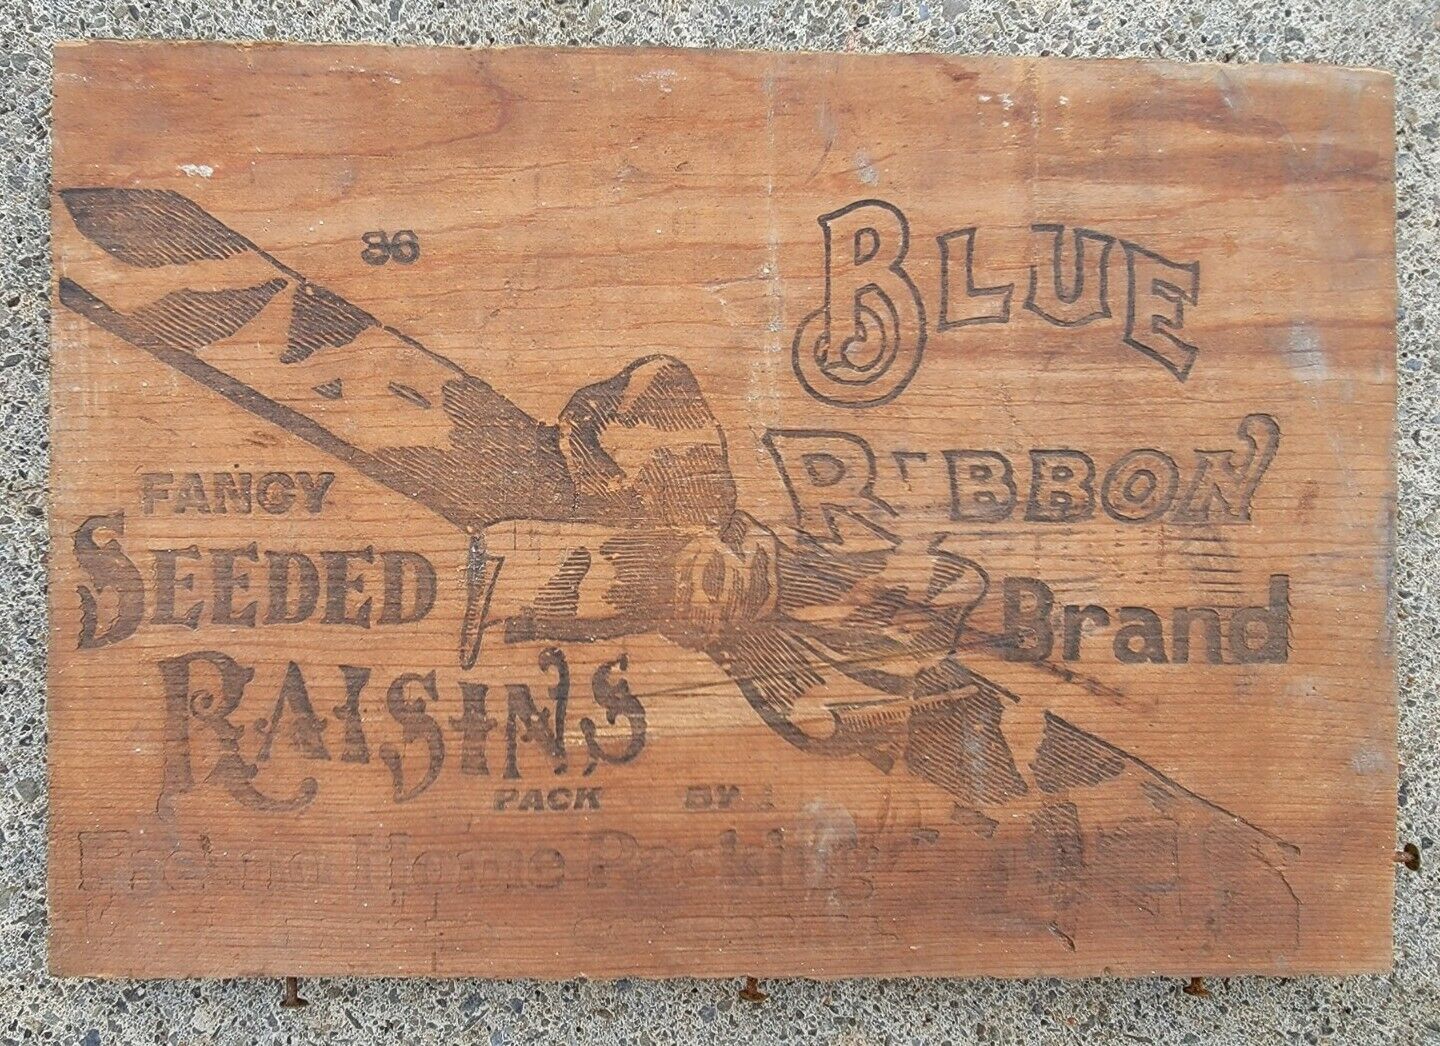 Rare Vtg Advertising Crate Side Blue Ribbon Fancy Seedless Raisins Wooden Sign